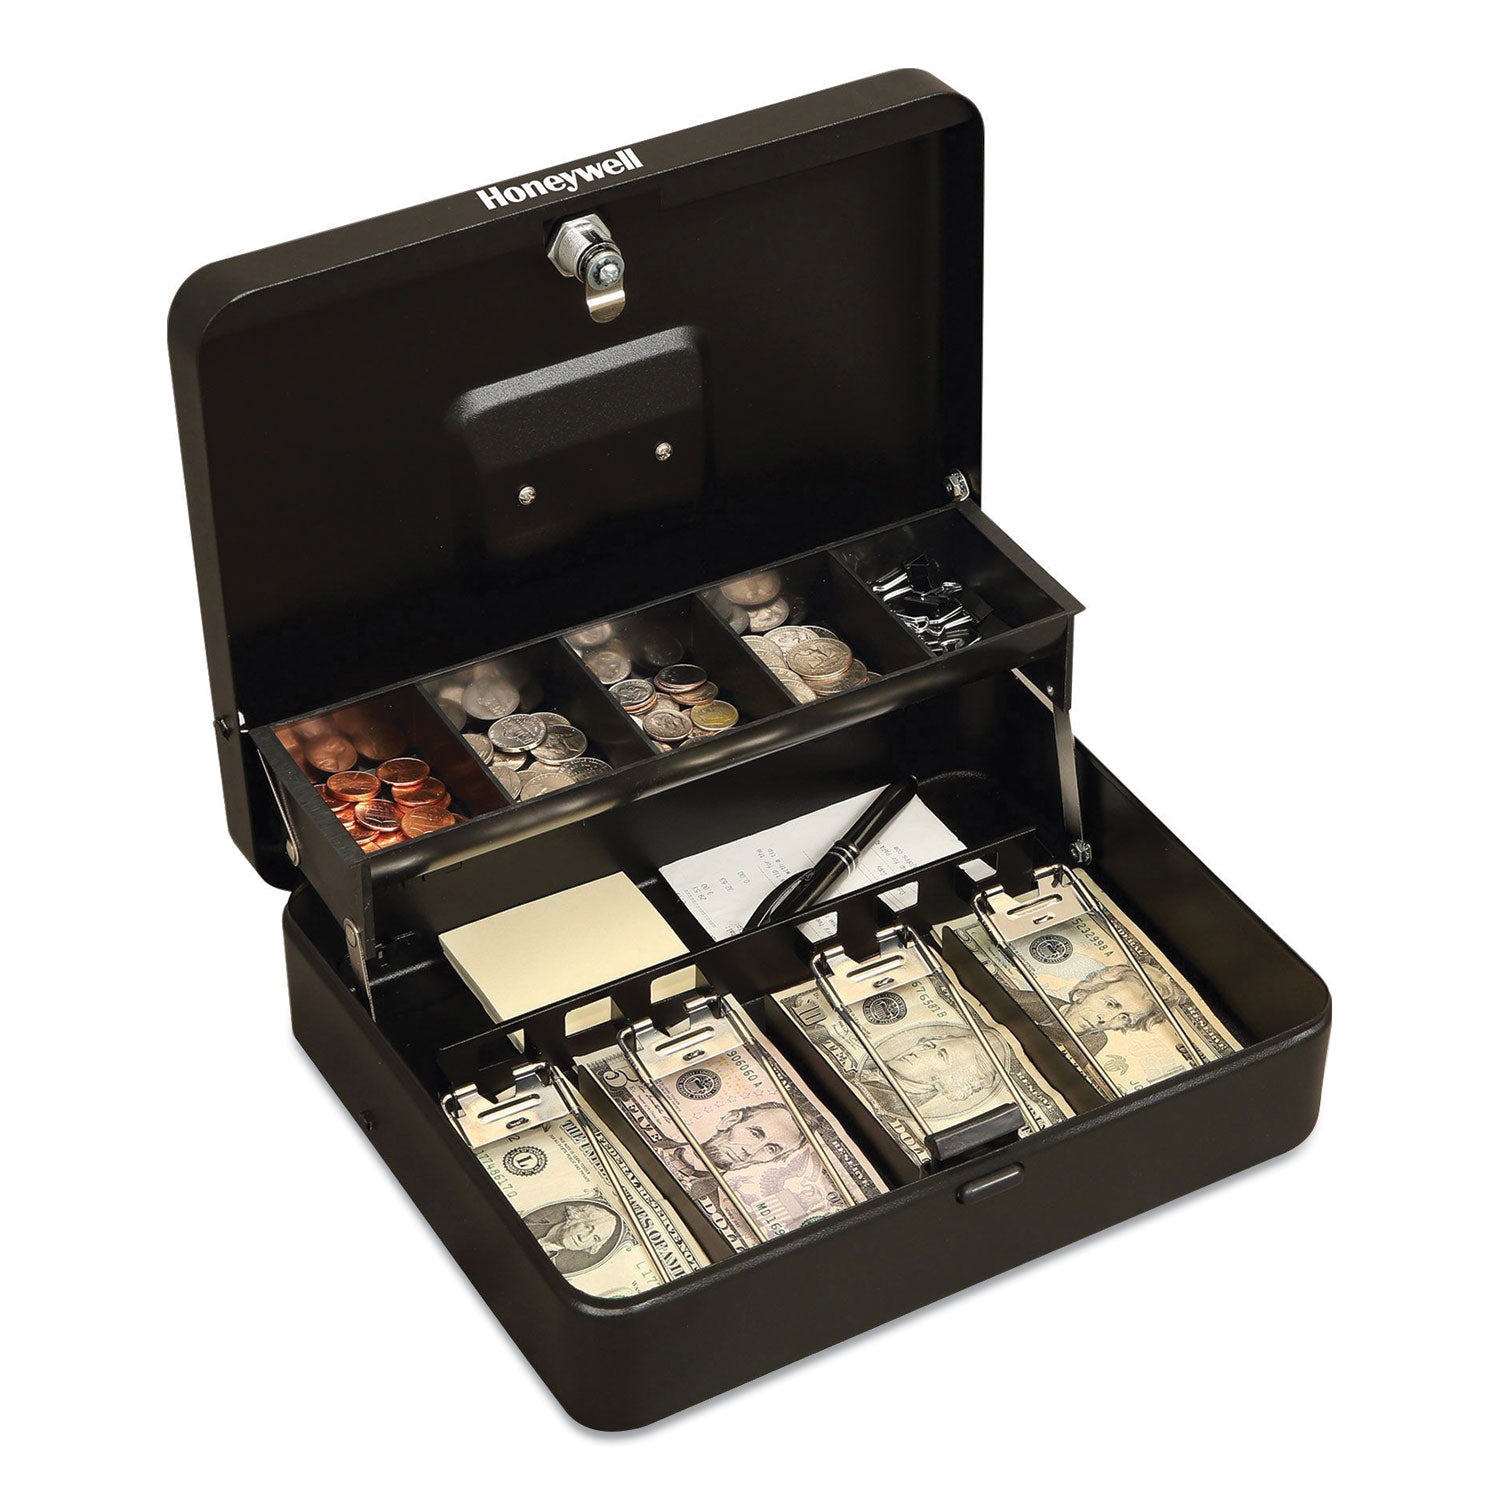 tiered-cantidoor-lever-cash-box-4-bill-5-coin-slots-key-lock-119-x-97-x-35-steel-black_hwl6213 - 1